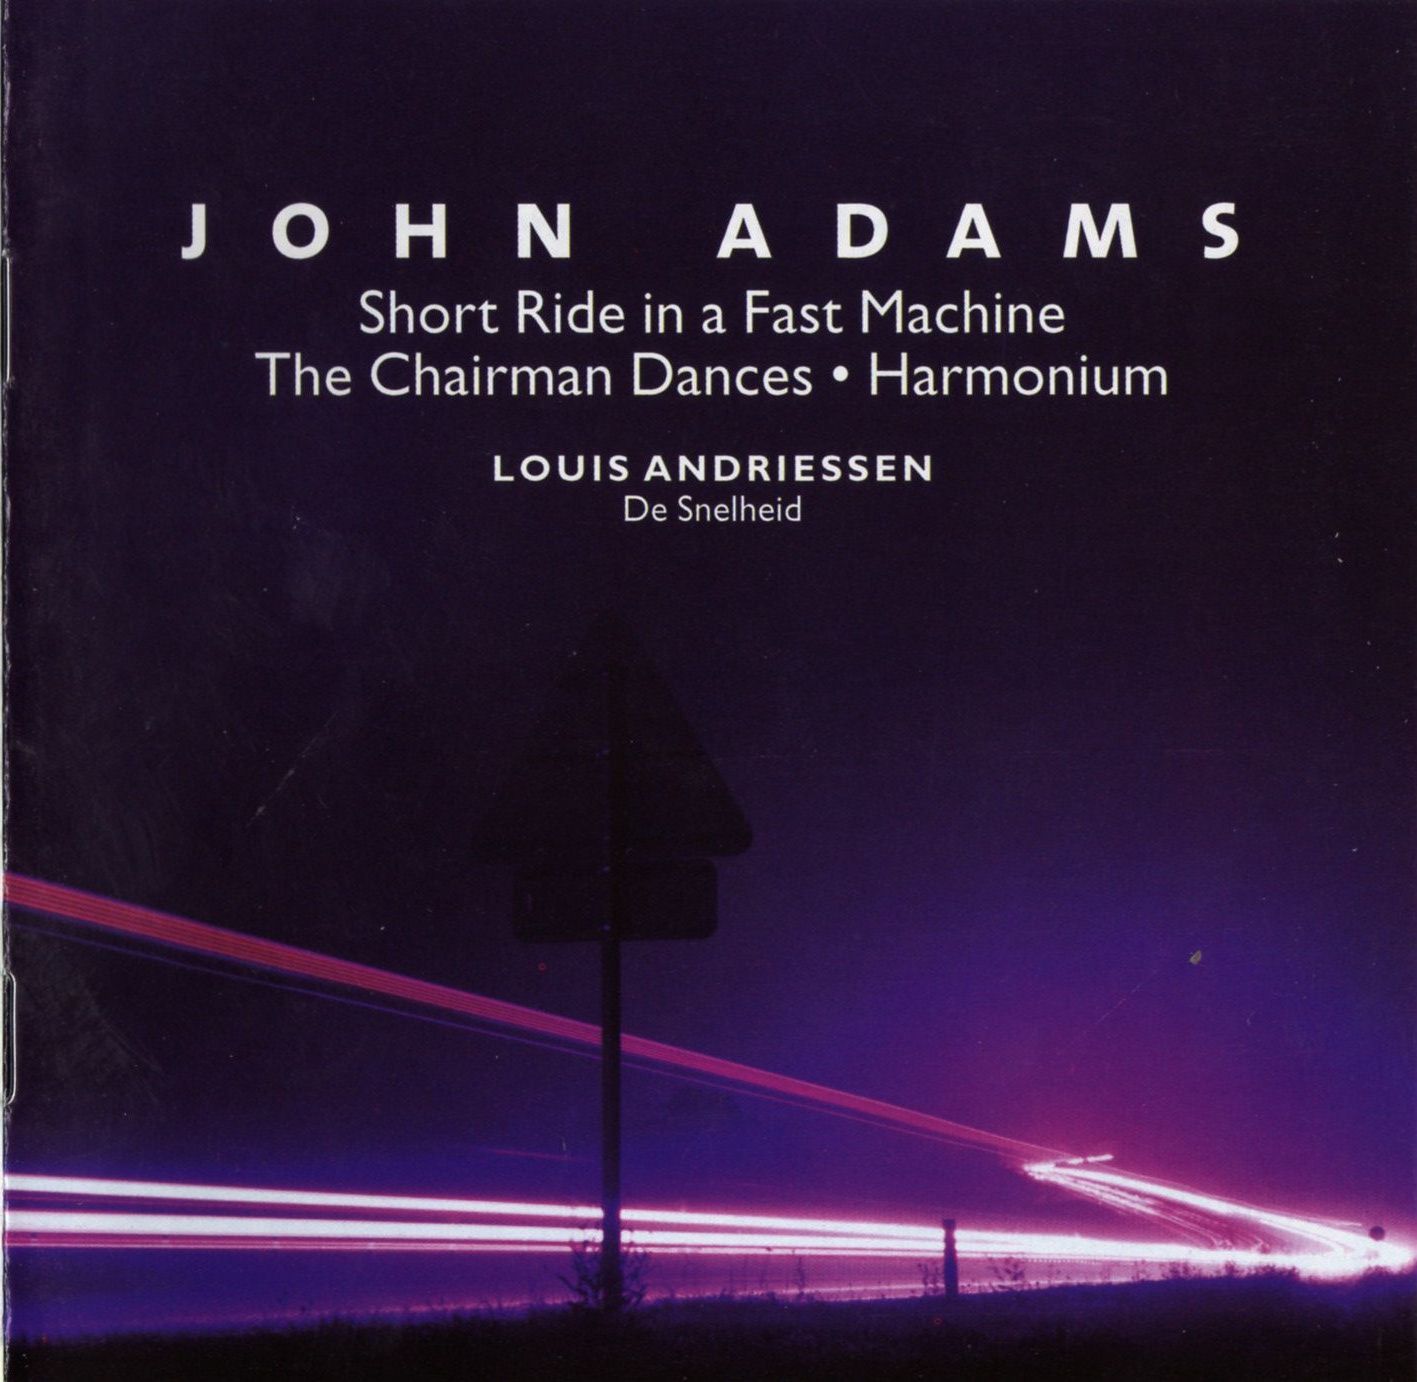 John Adams - BBC Music Vol 11 No 2